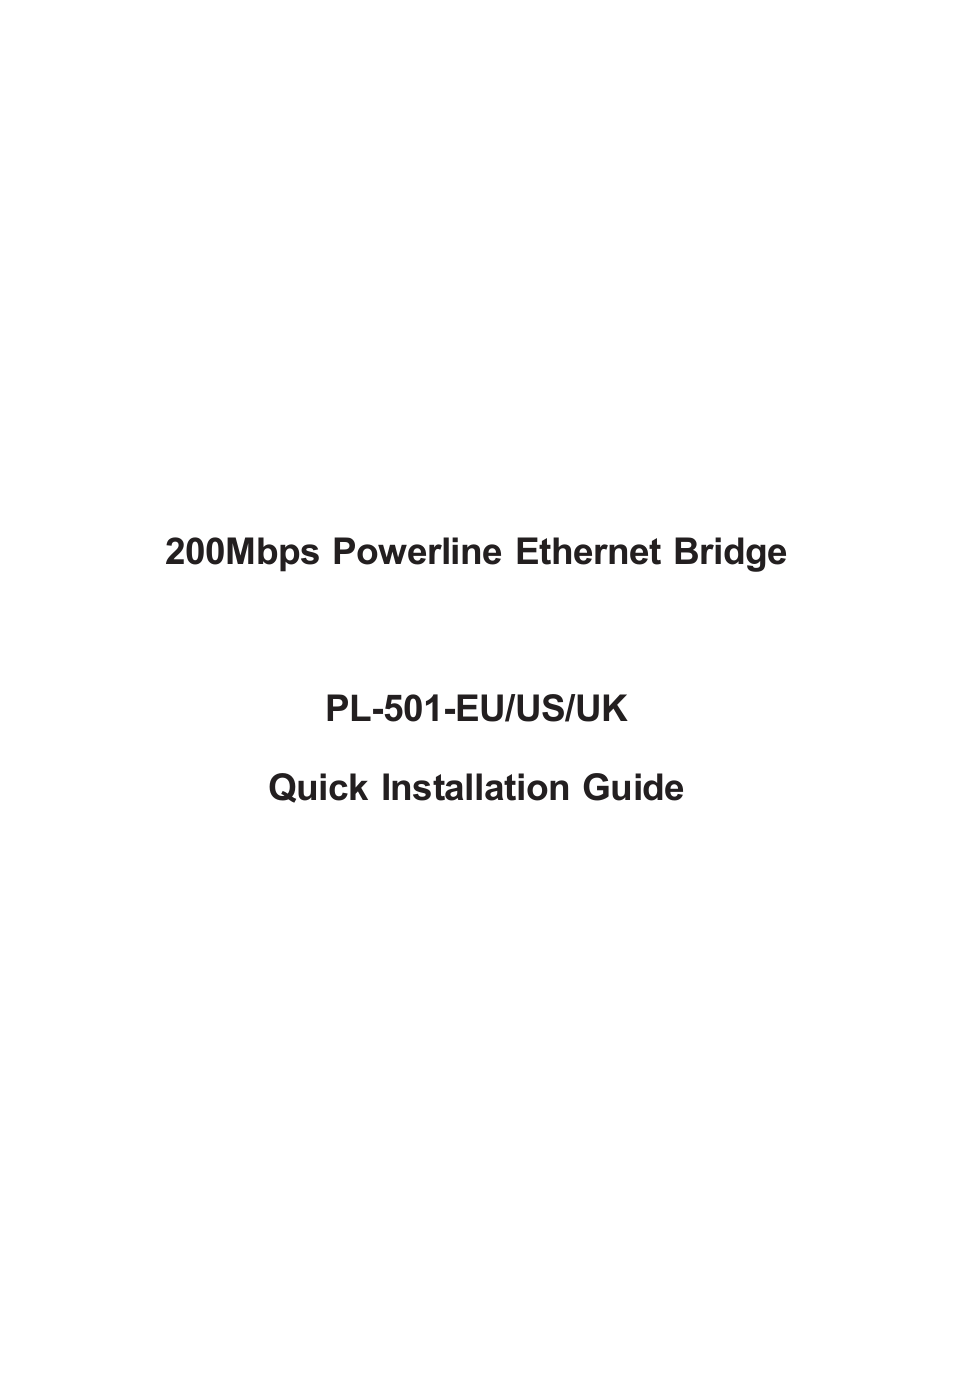 200Mbps Powerline Ethernet Bridge PL-501-EU/US/UK